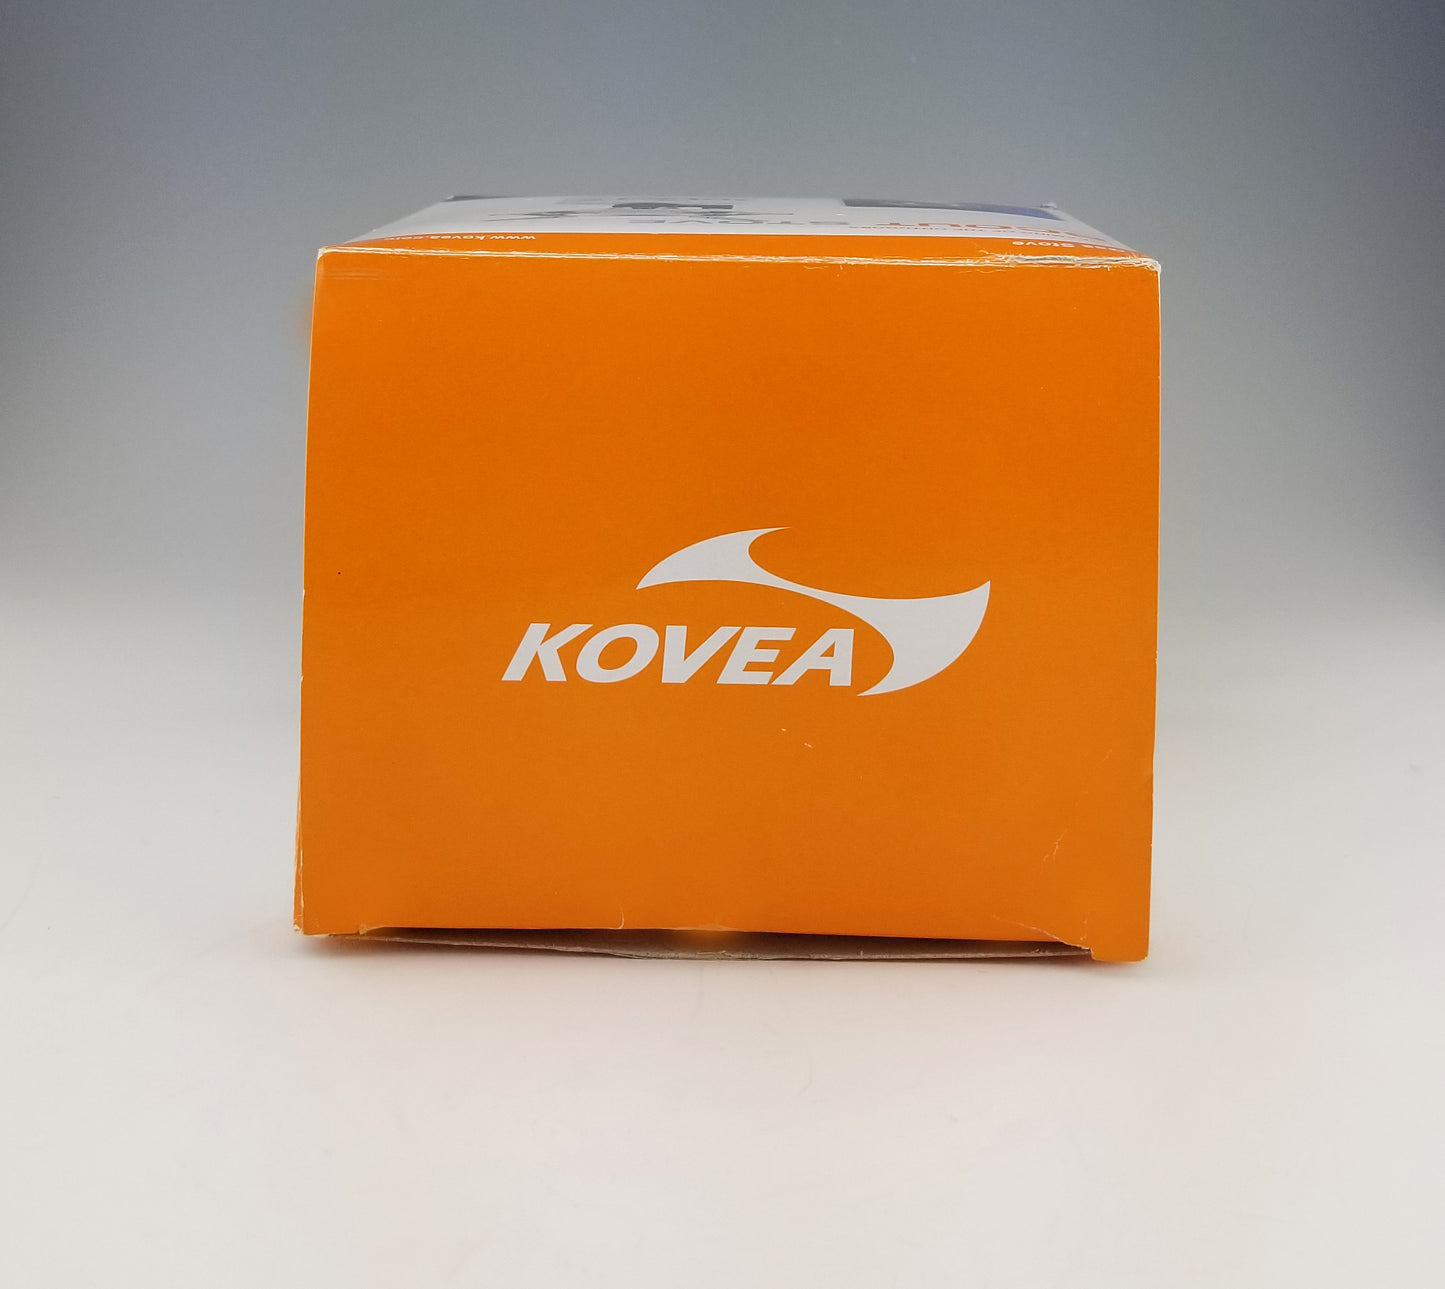 Kovea Scout Stove - Isobutane or Propane Based